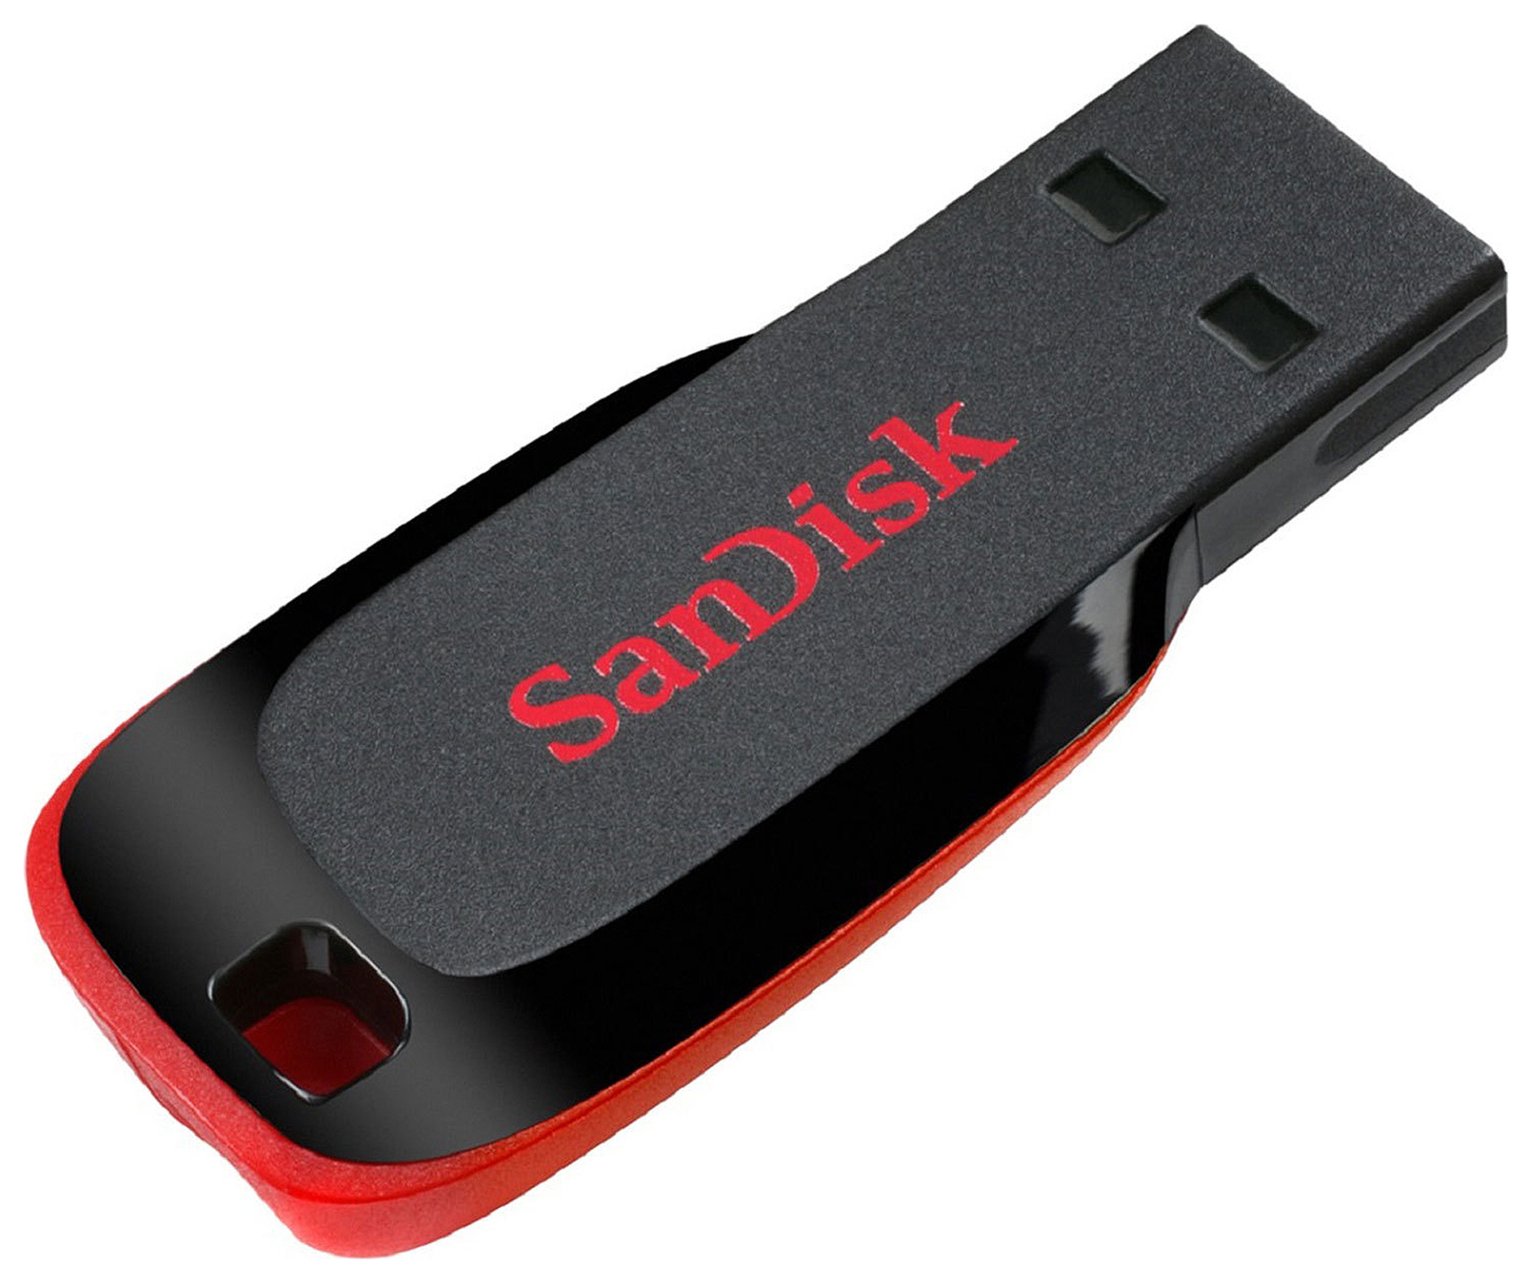 SanDisk Cruzer Blade USB 2.0 Flash Drive Review